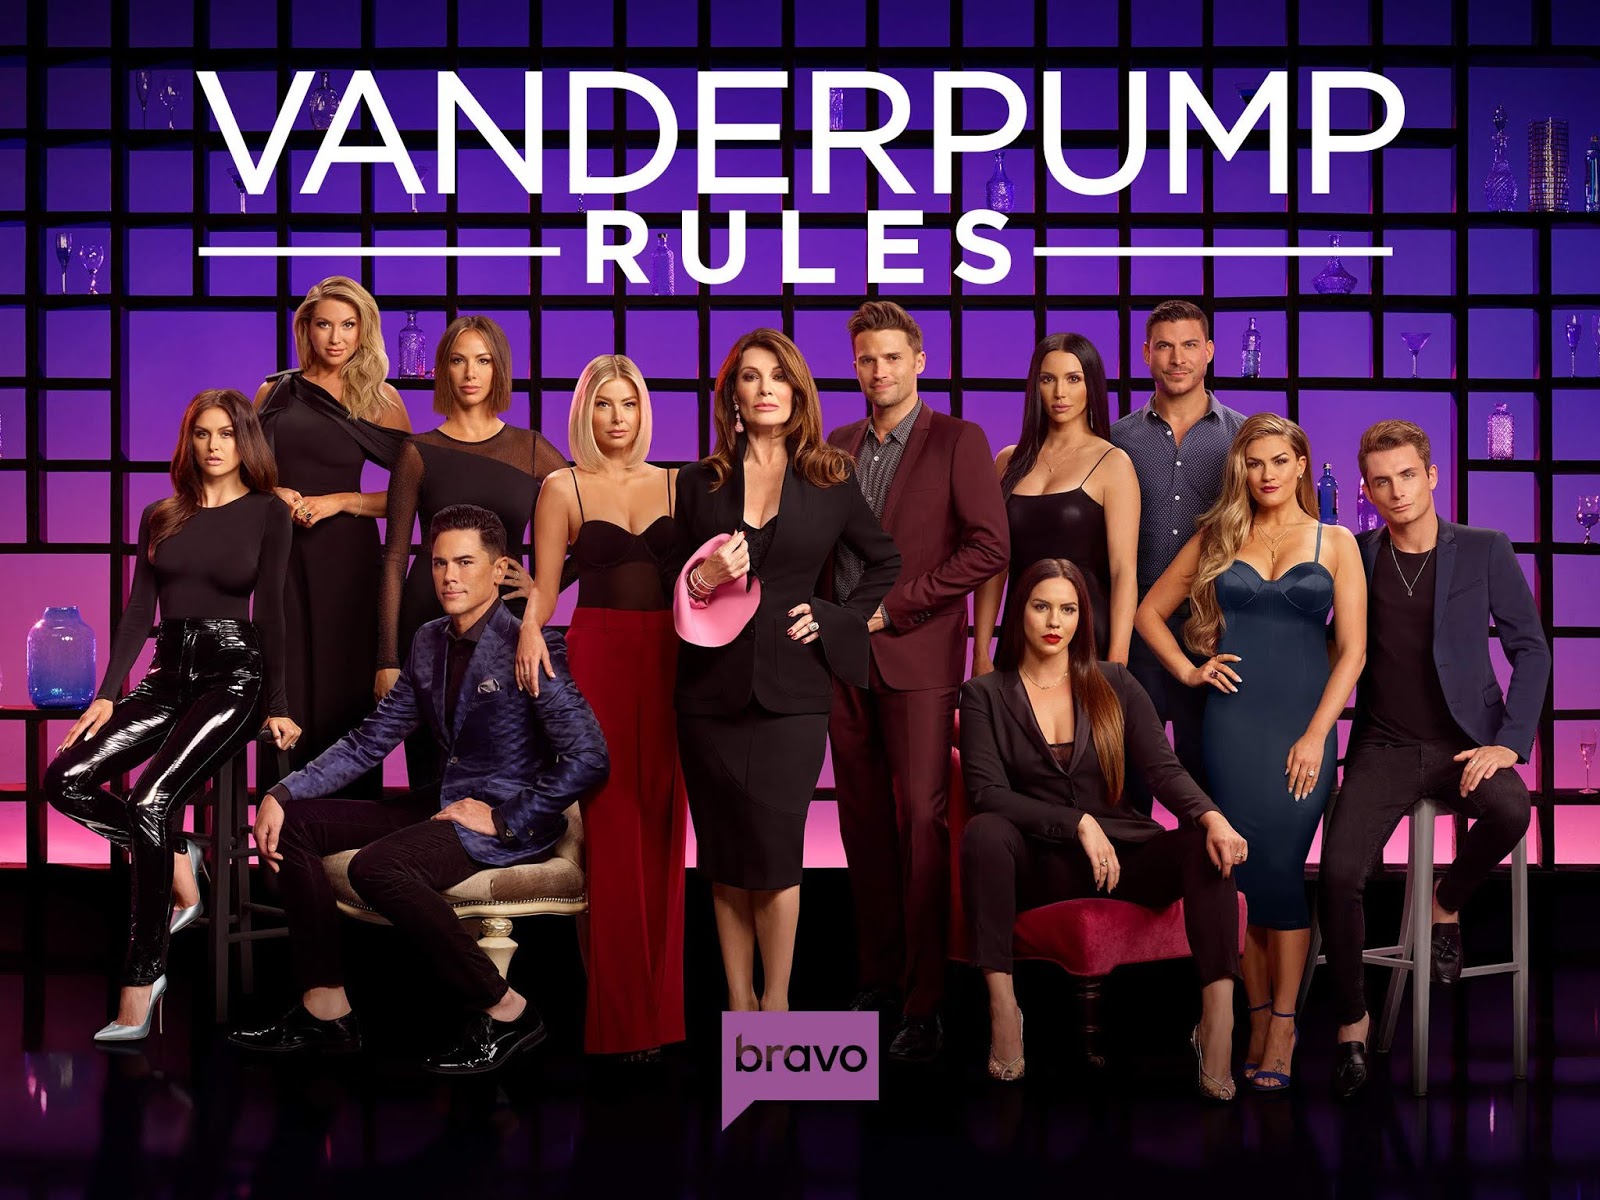 Vanderpump Rules Season 7 Reunion Seating Revealed!